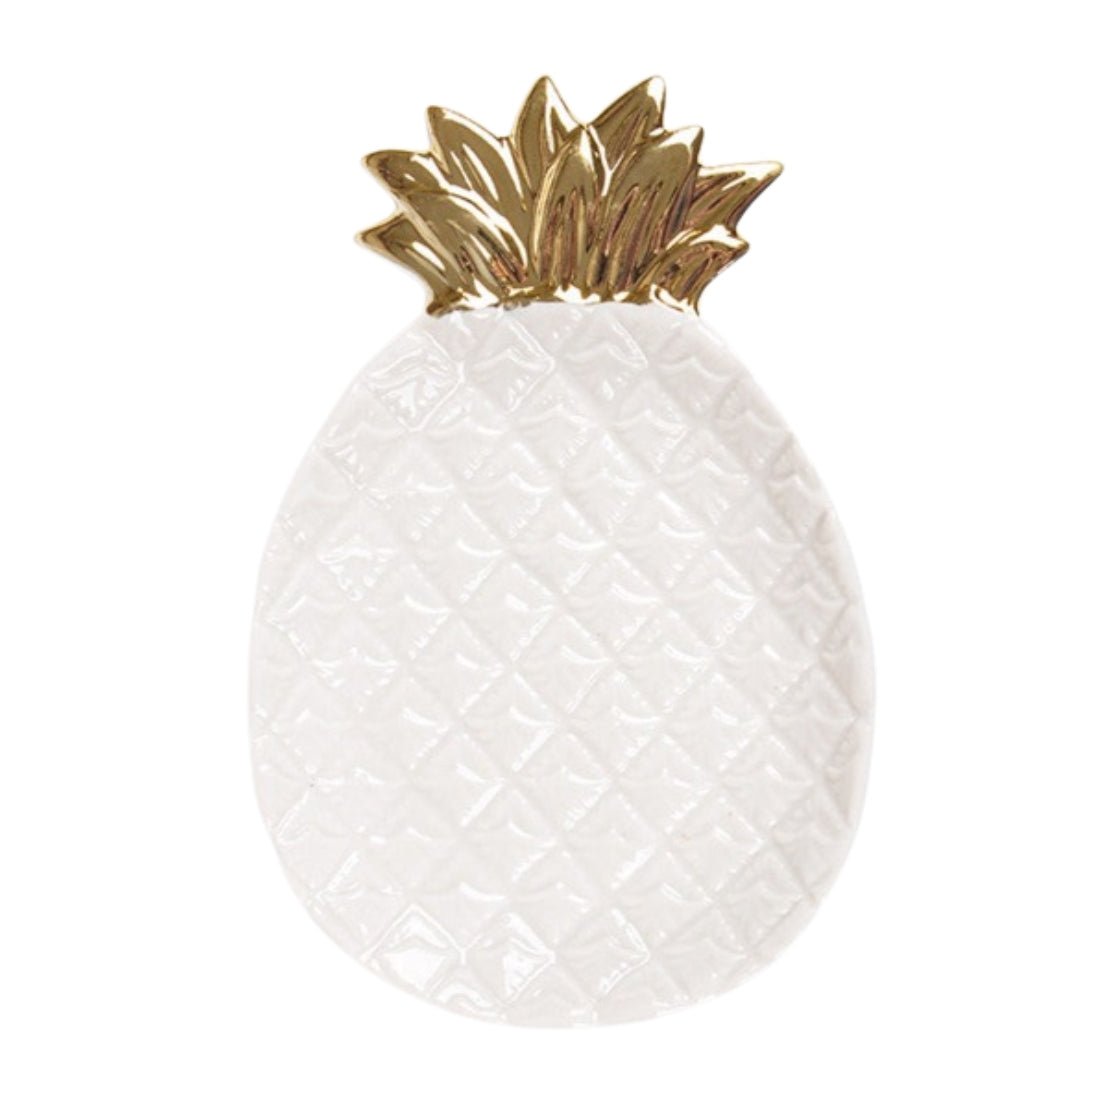 White & gold, ceramic pineapple decorative tray